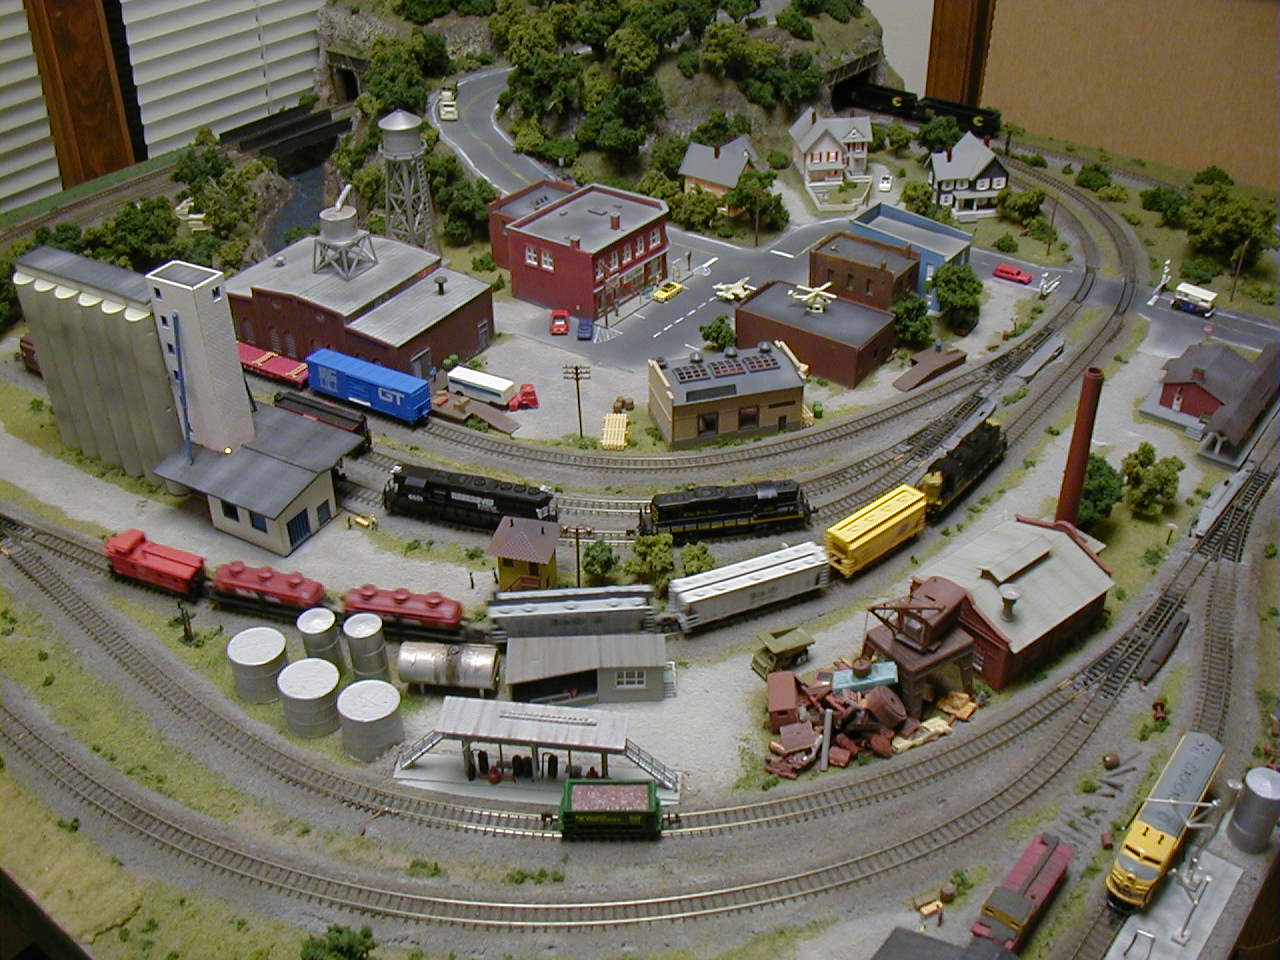 Greg's Incredible 4' X 4' N Scale Model Train Layout Photo 